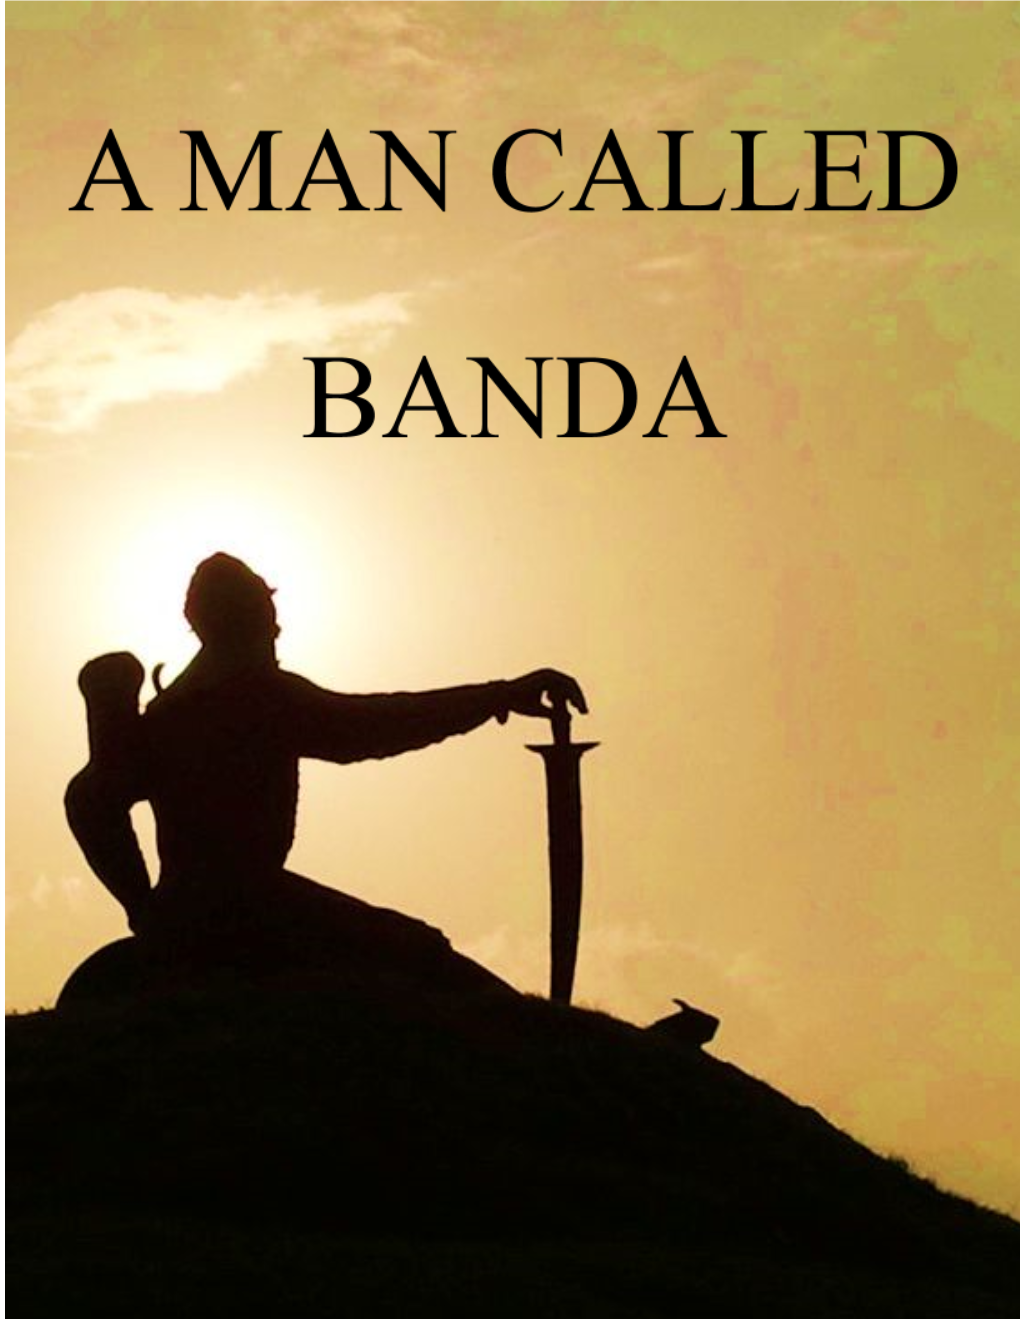 A Man Called Banda © 2019 Rupinder Singh Brar, Yuba City, CA